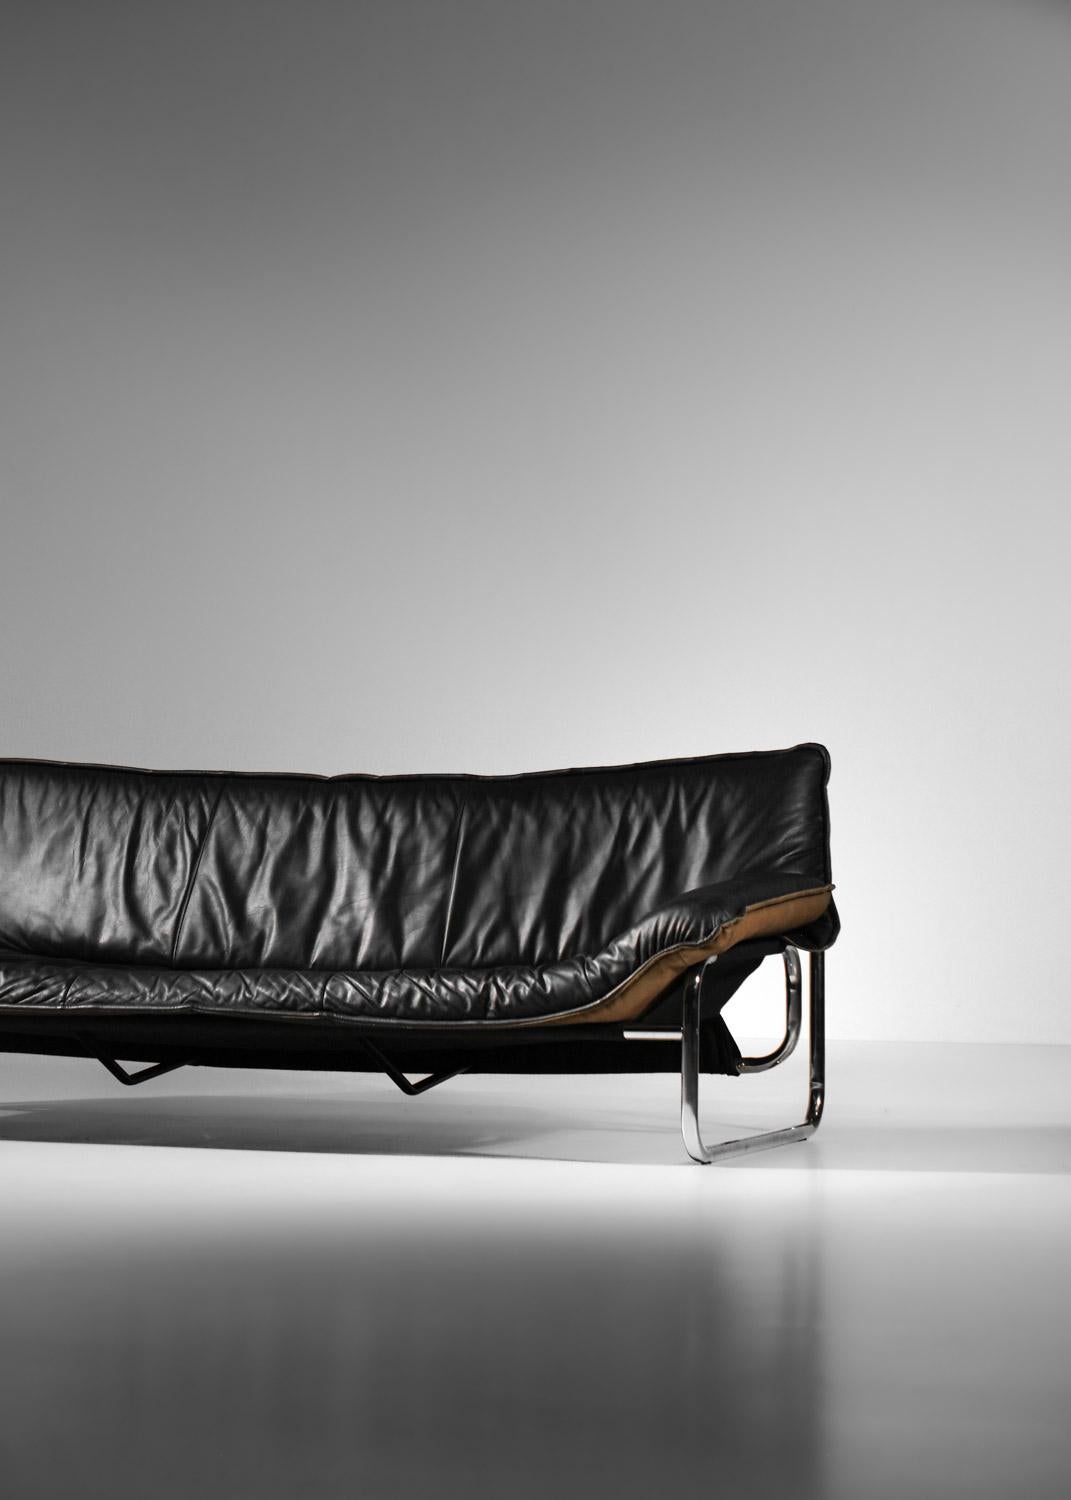 Scandinavian Modern Sofa  by Johan Bertil Haggstrom for ikea 70's in leather and chromed steel